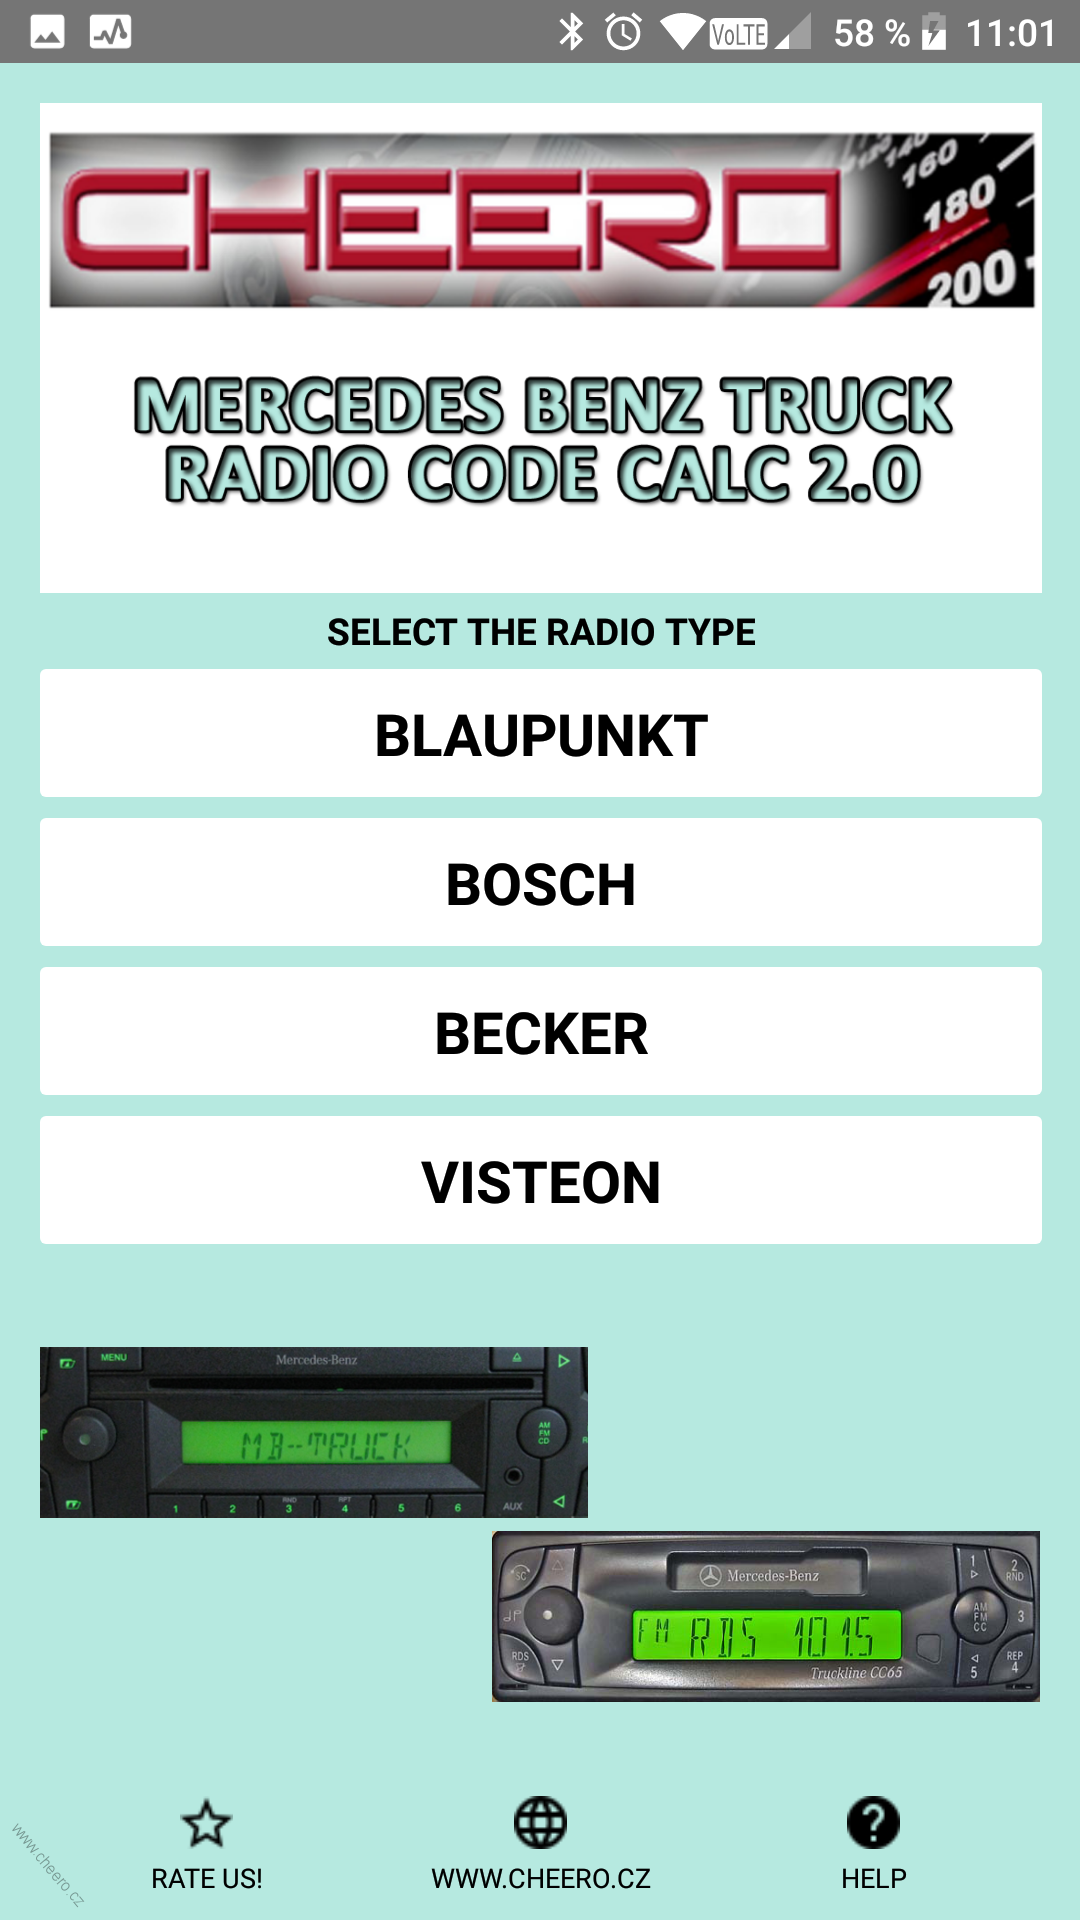 RADIO CODE GENERATOR | MERCEDES BENZ TRUCK - RADIO CODE CALC - BLAUPUNKT BOSCH BECKER | CHEERO - autoelektronika